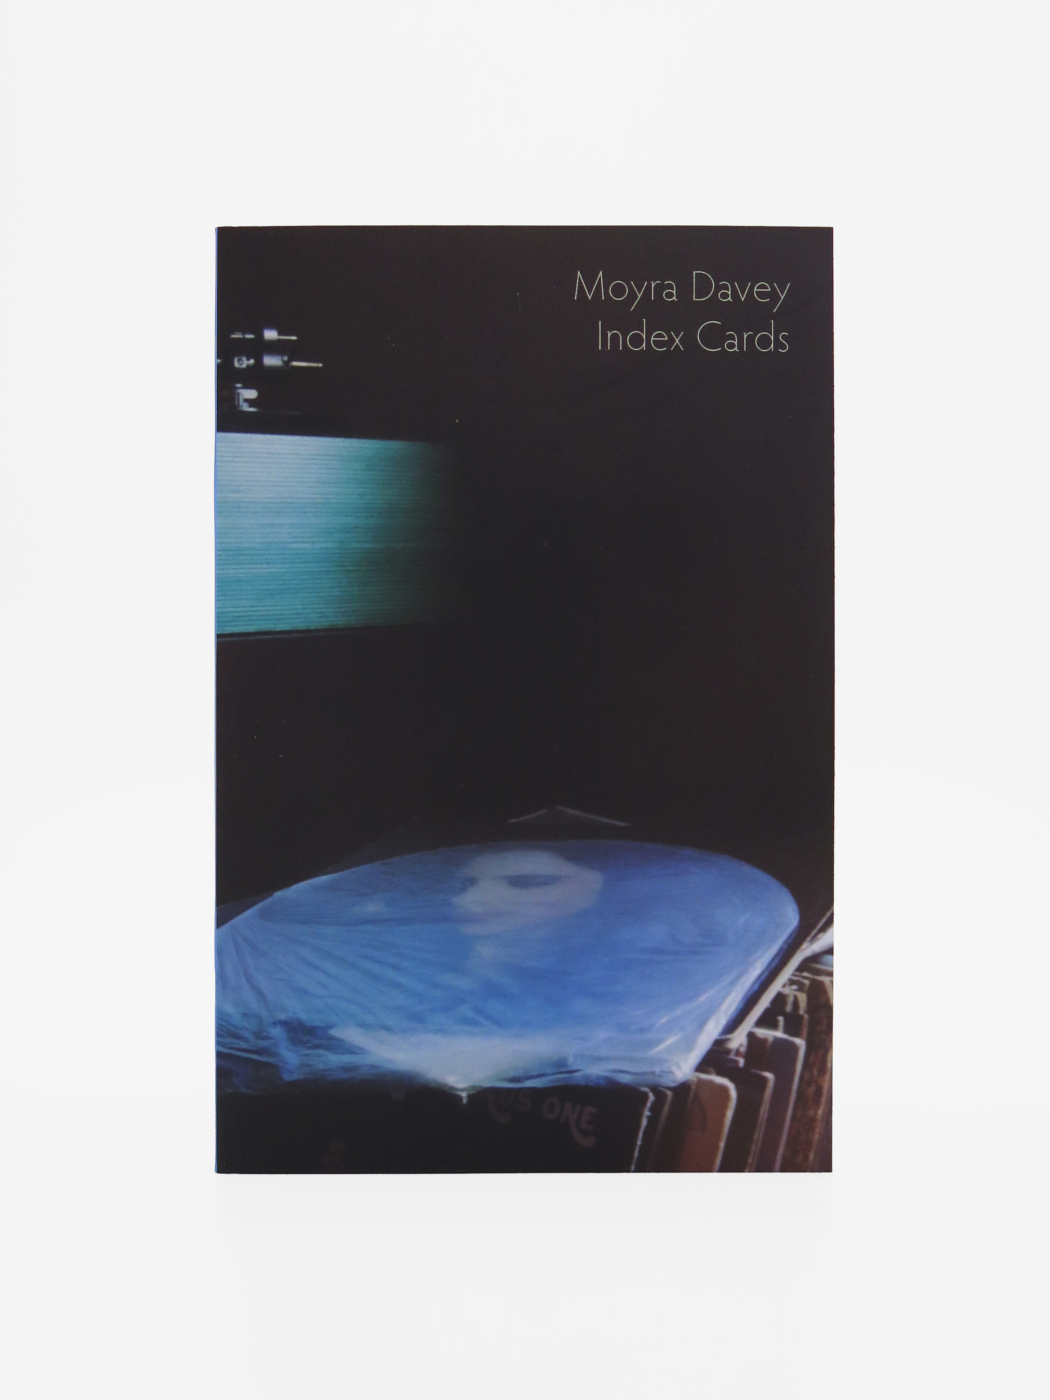 Moyra Davey, Index Cards